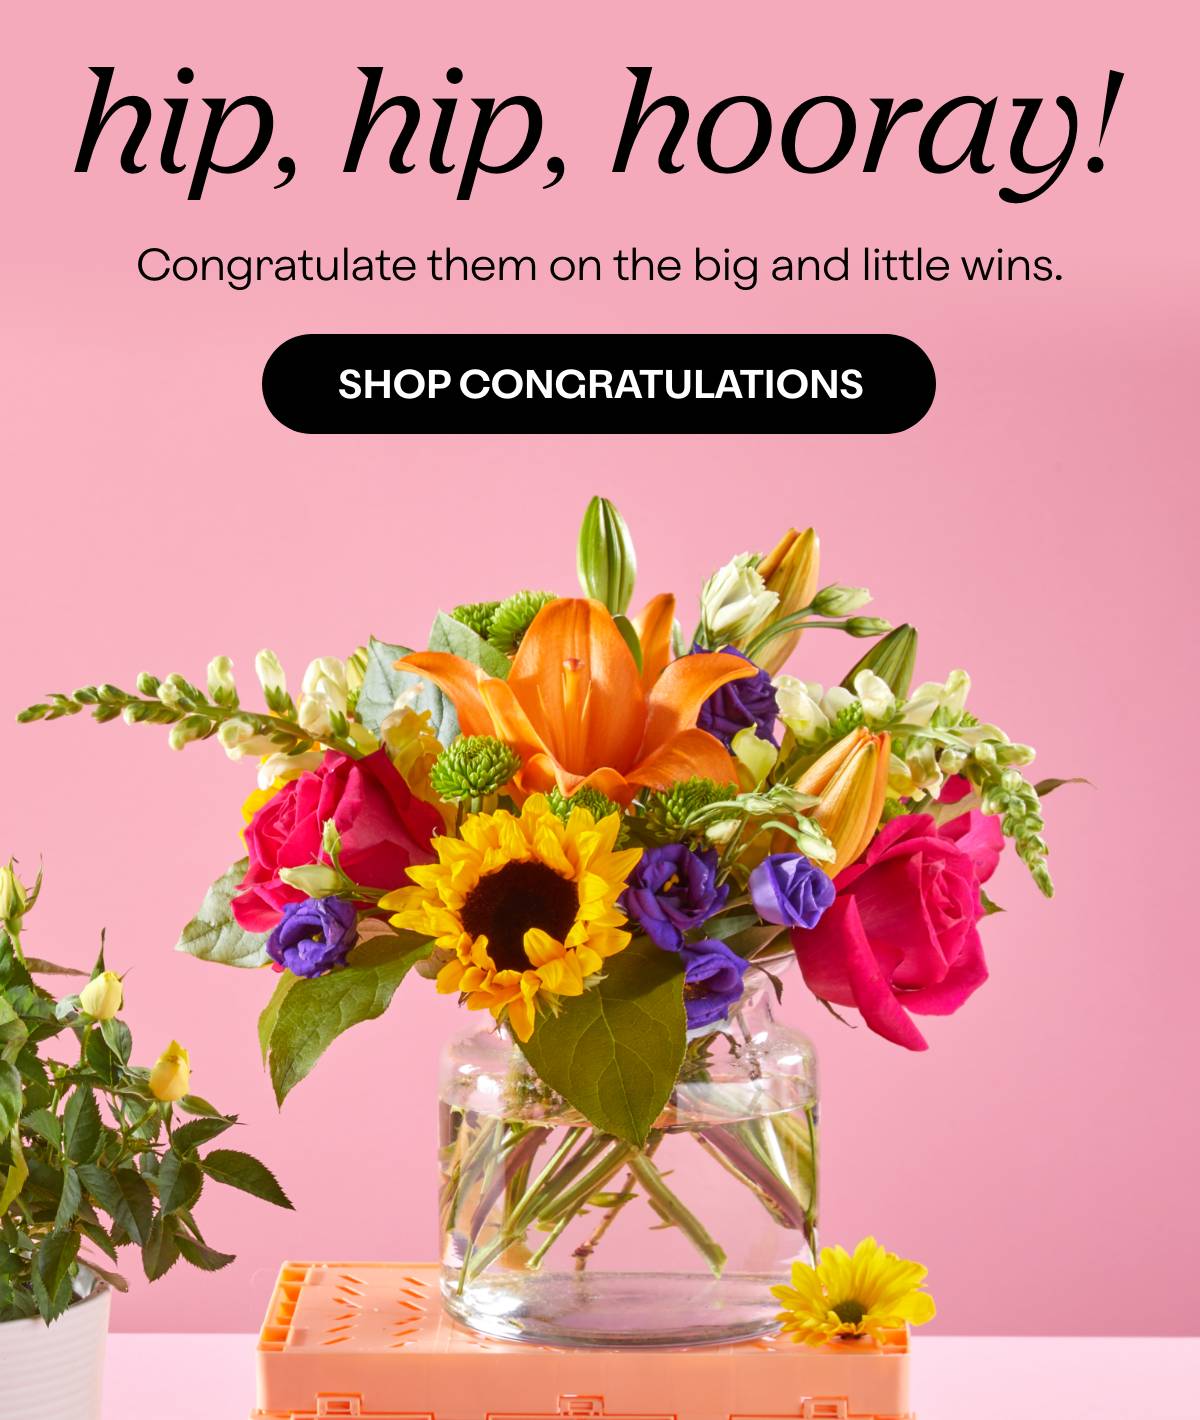 hip, hip, hooray! - Congratulate them on the big and little wins. - SHOP CONGRATULATIONS 